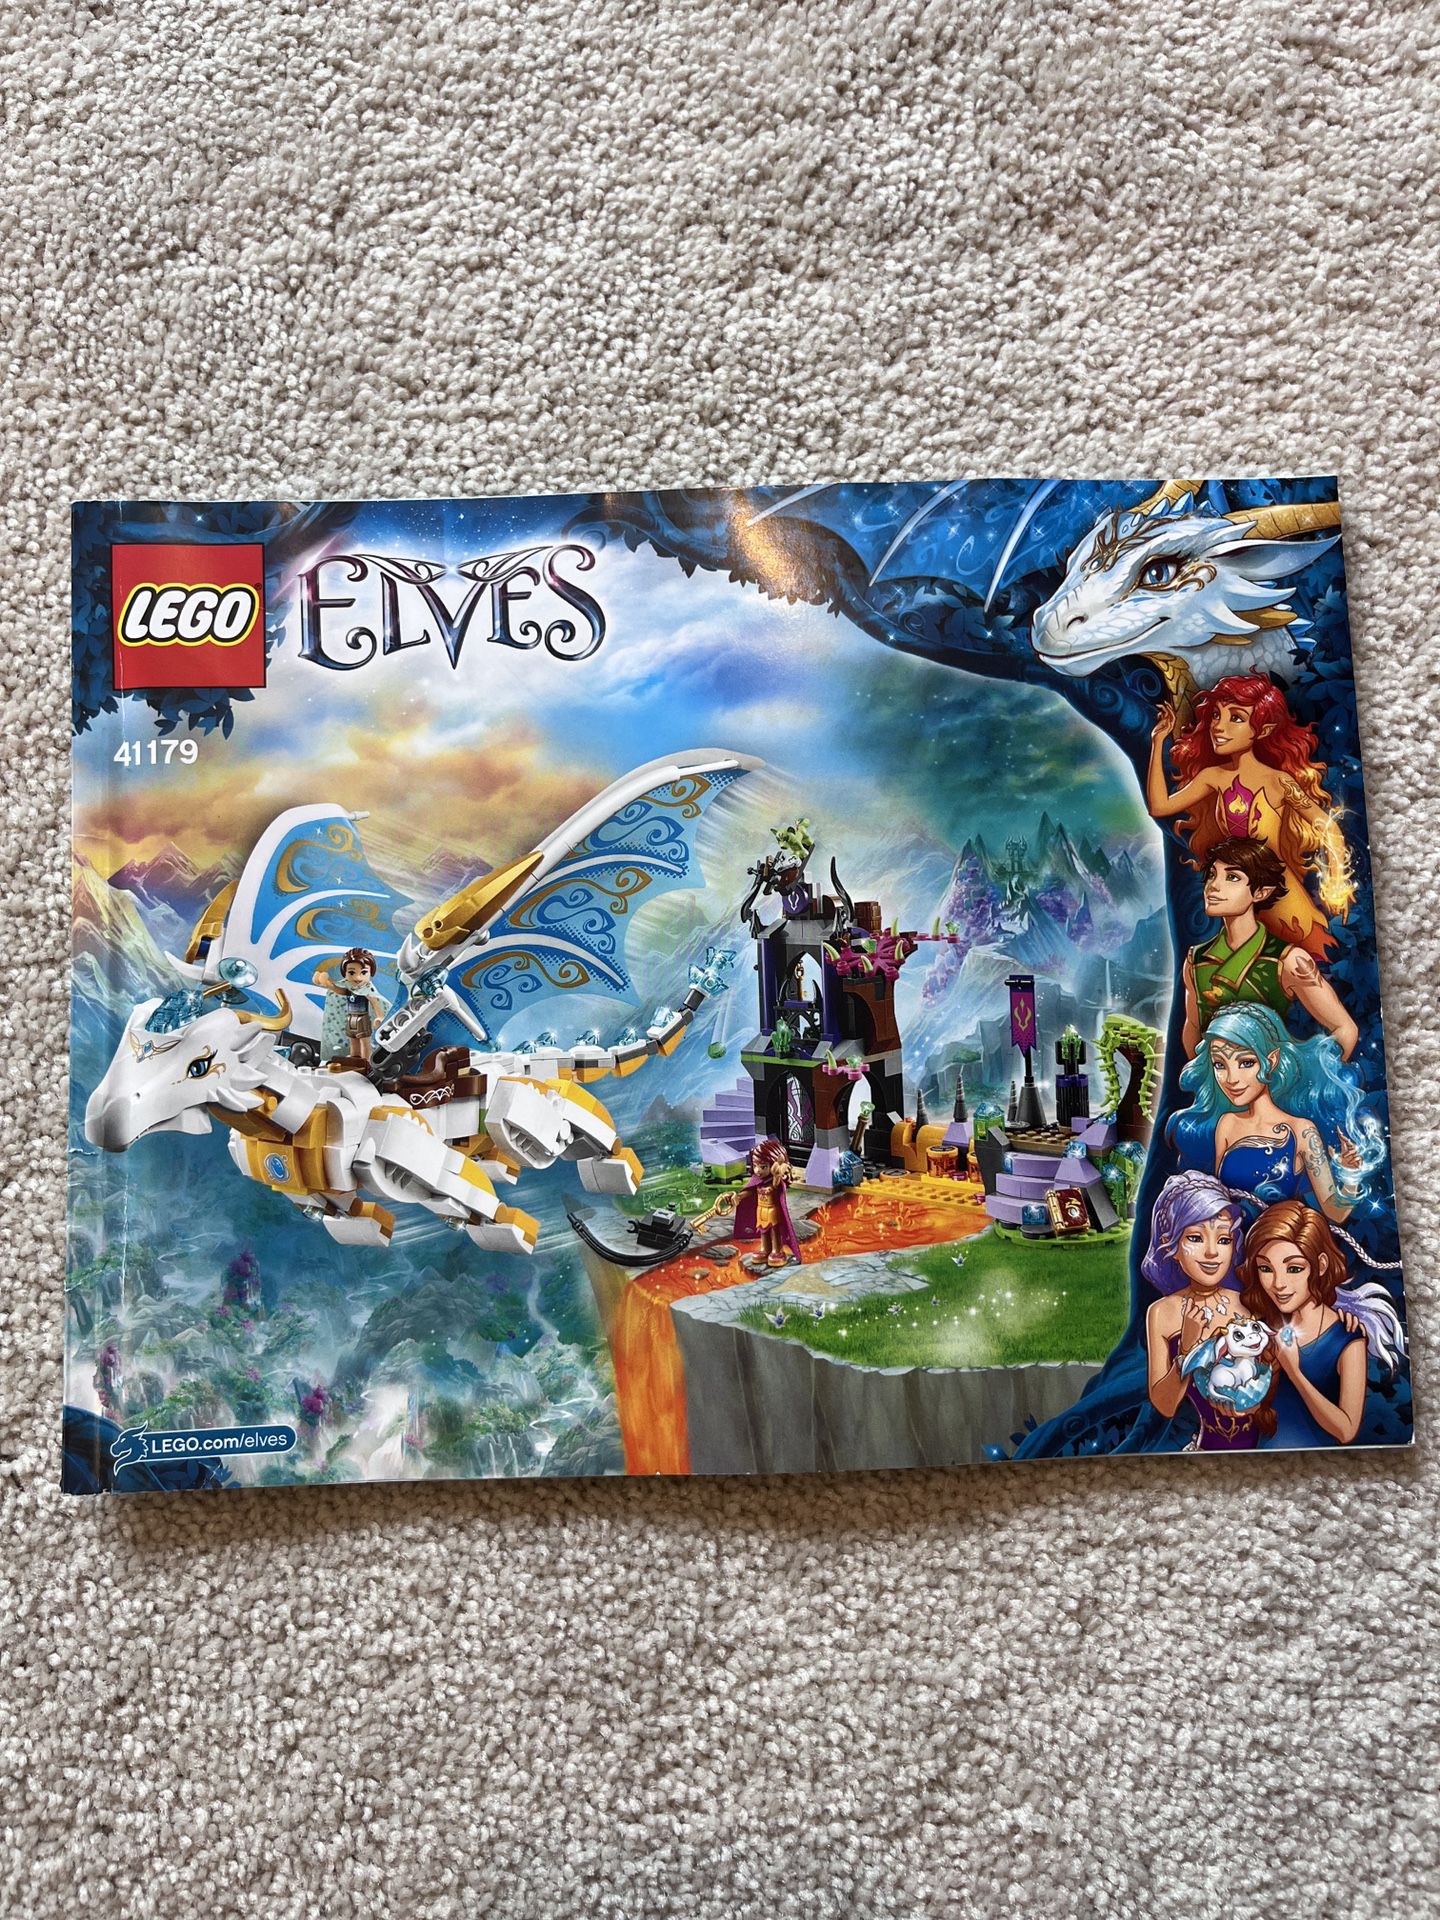 falanks Snavs Betjene Lego Elves Queen Dragon for Sale in Powhatan, VA - OfferUp